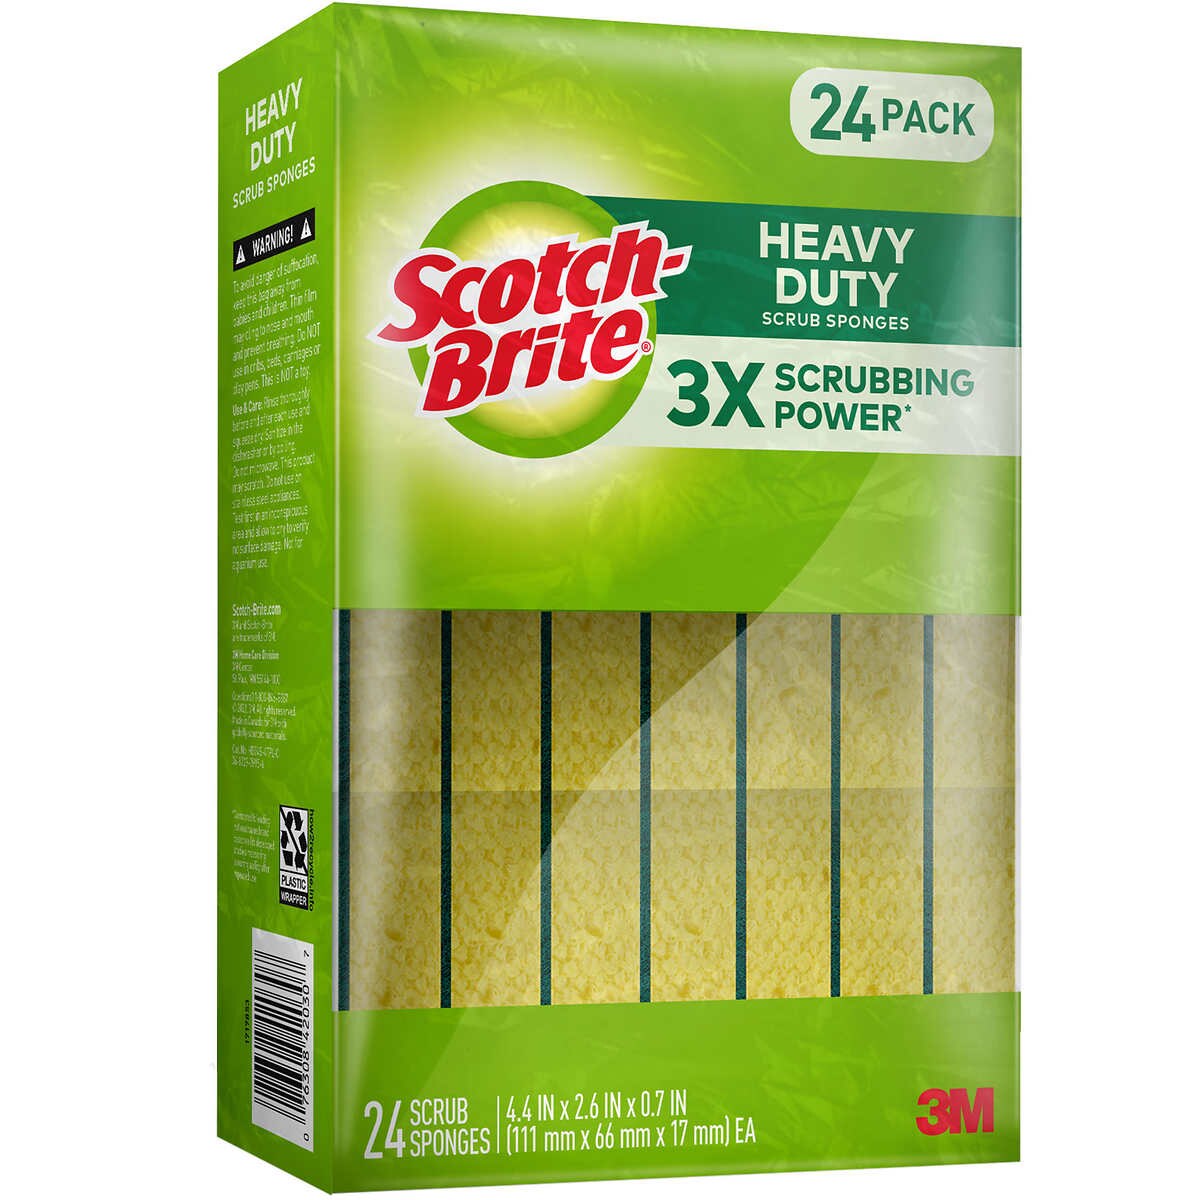 Scotch-Brite Heavy Duty Scrub Sponges, 9 Scrubbing Sponges 